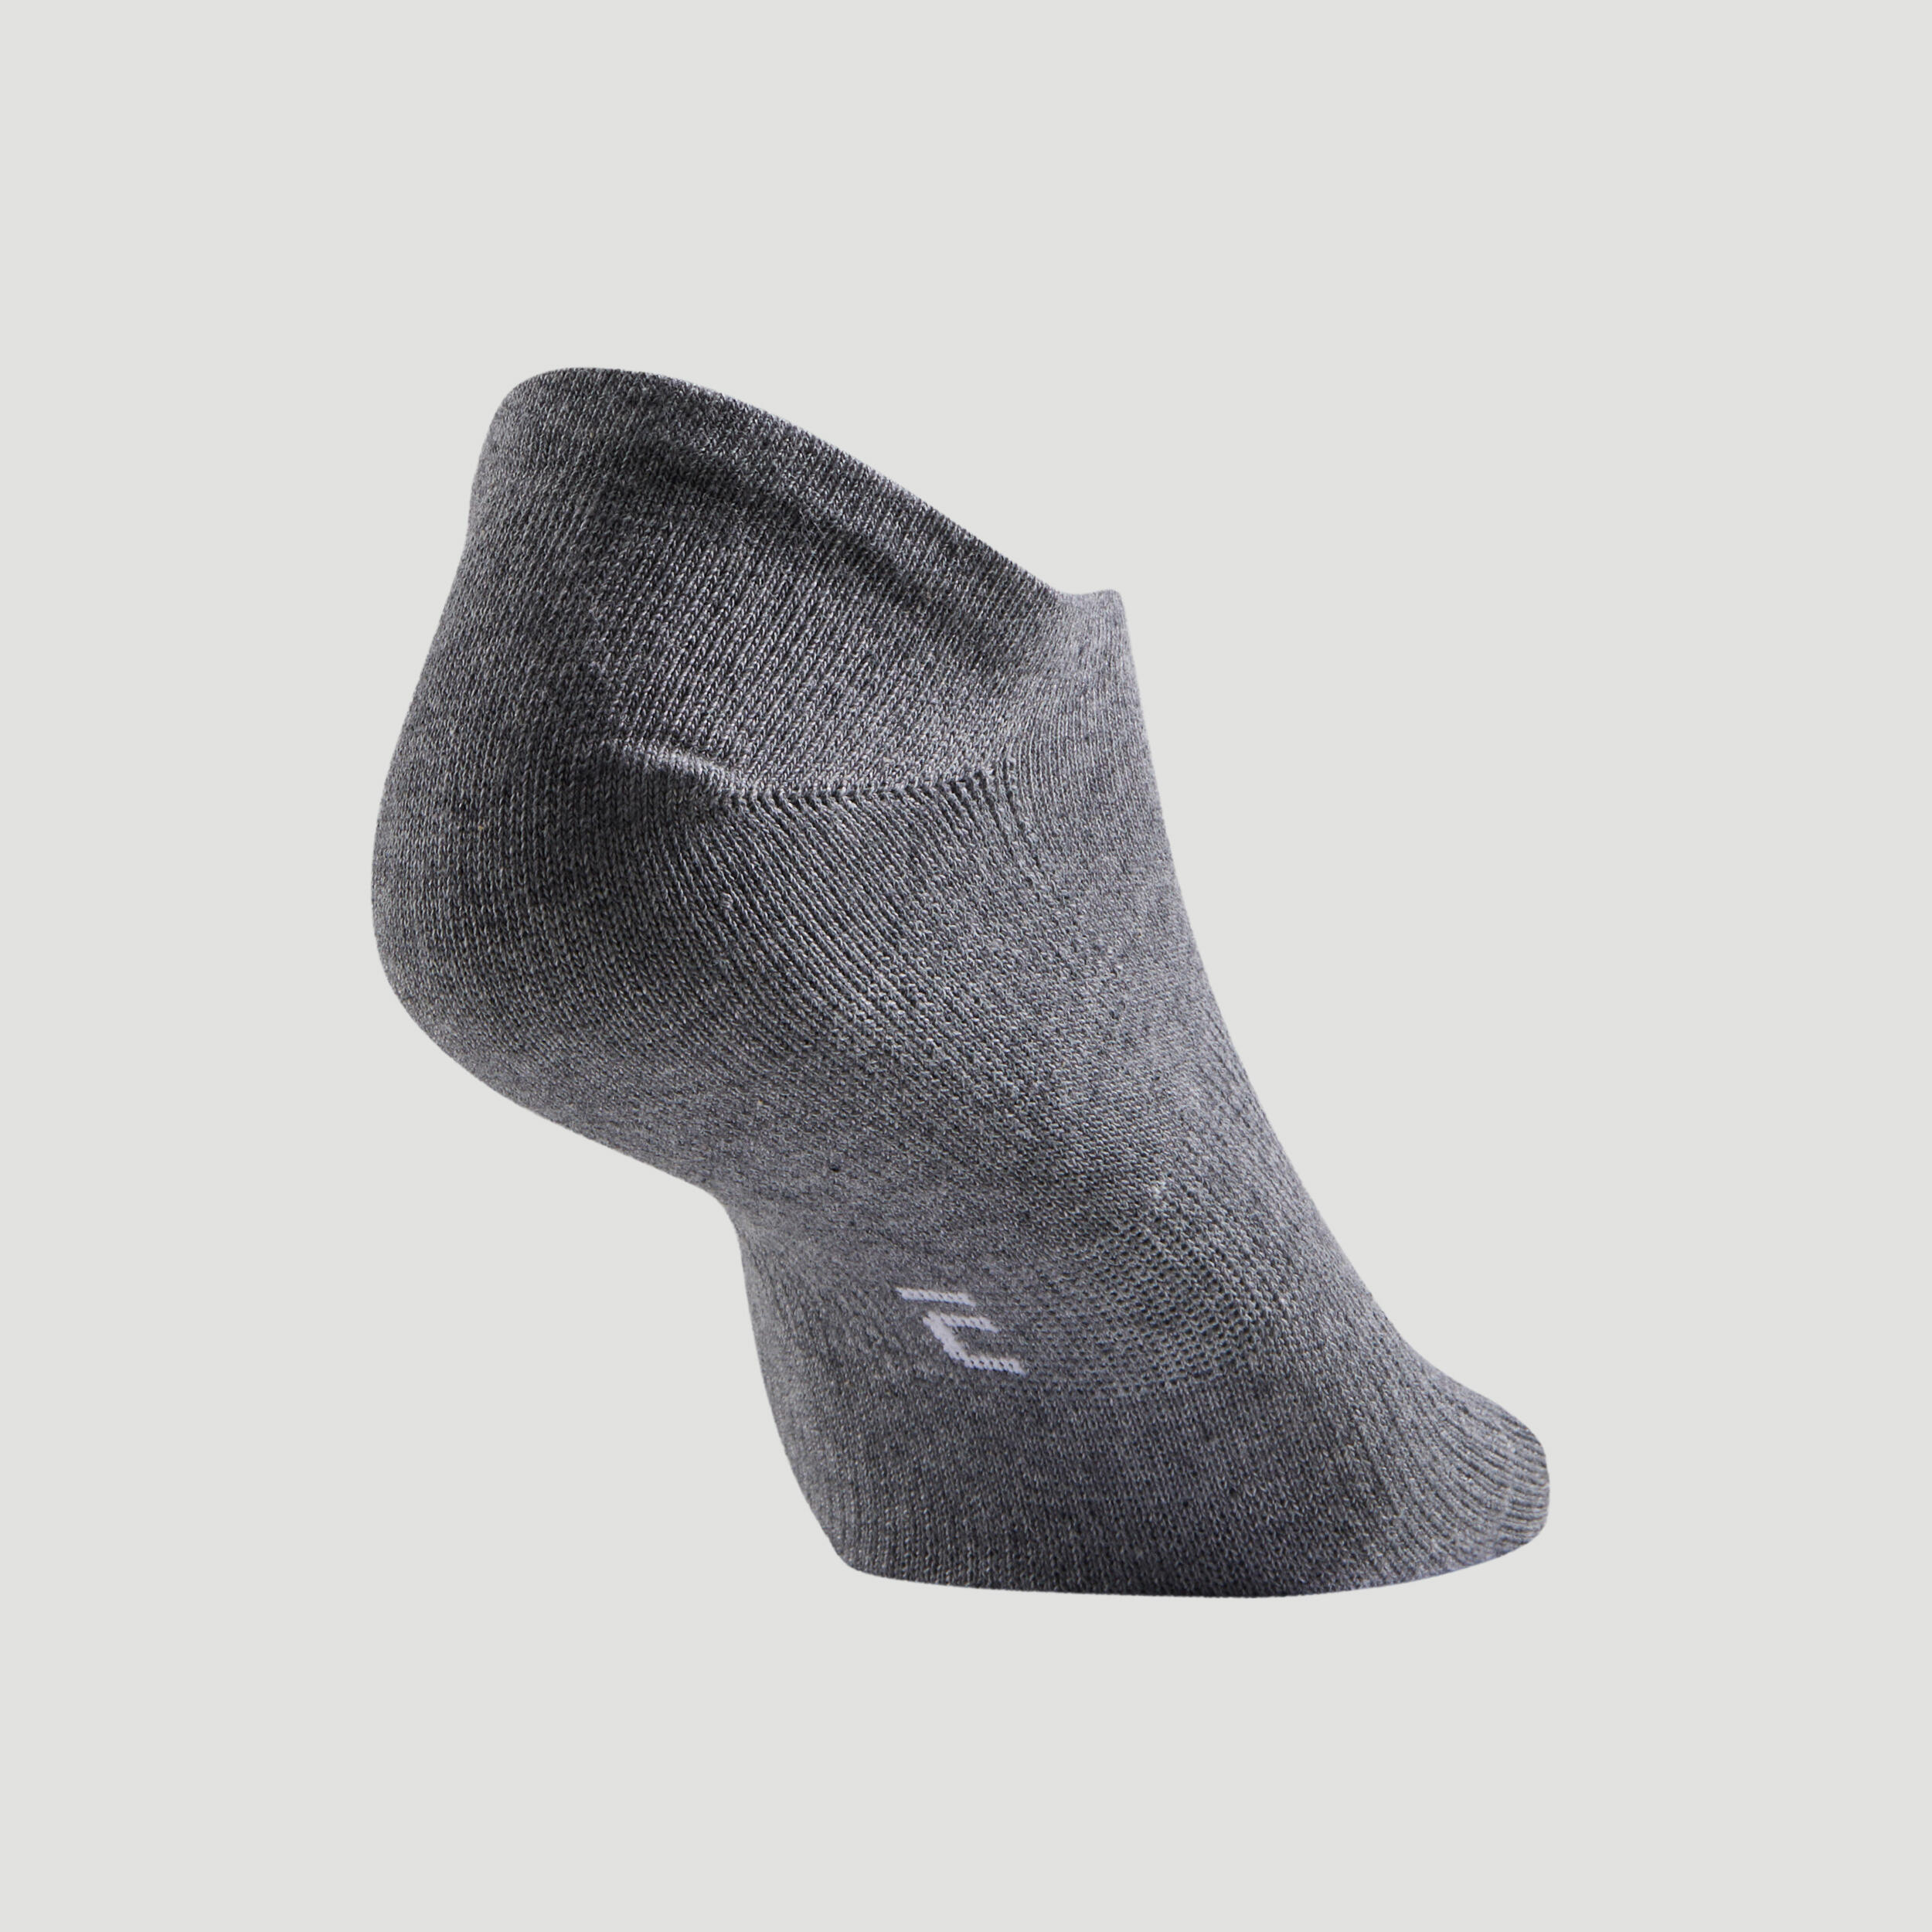 RS 160 Low Sports Socks 3-Pack - Black/Grey 7/10